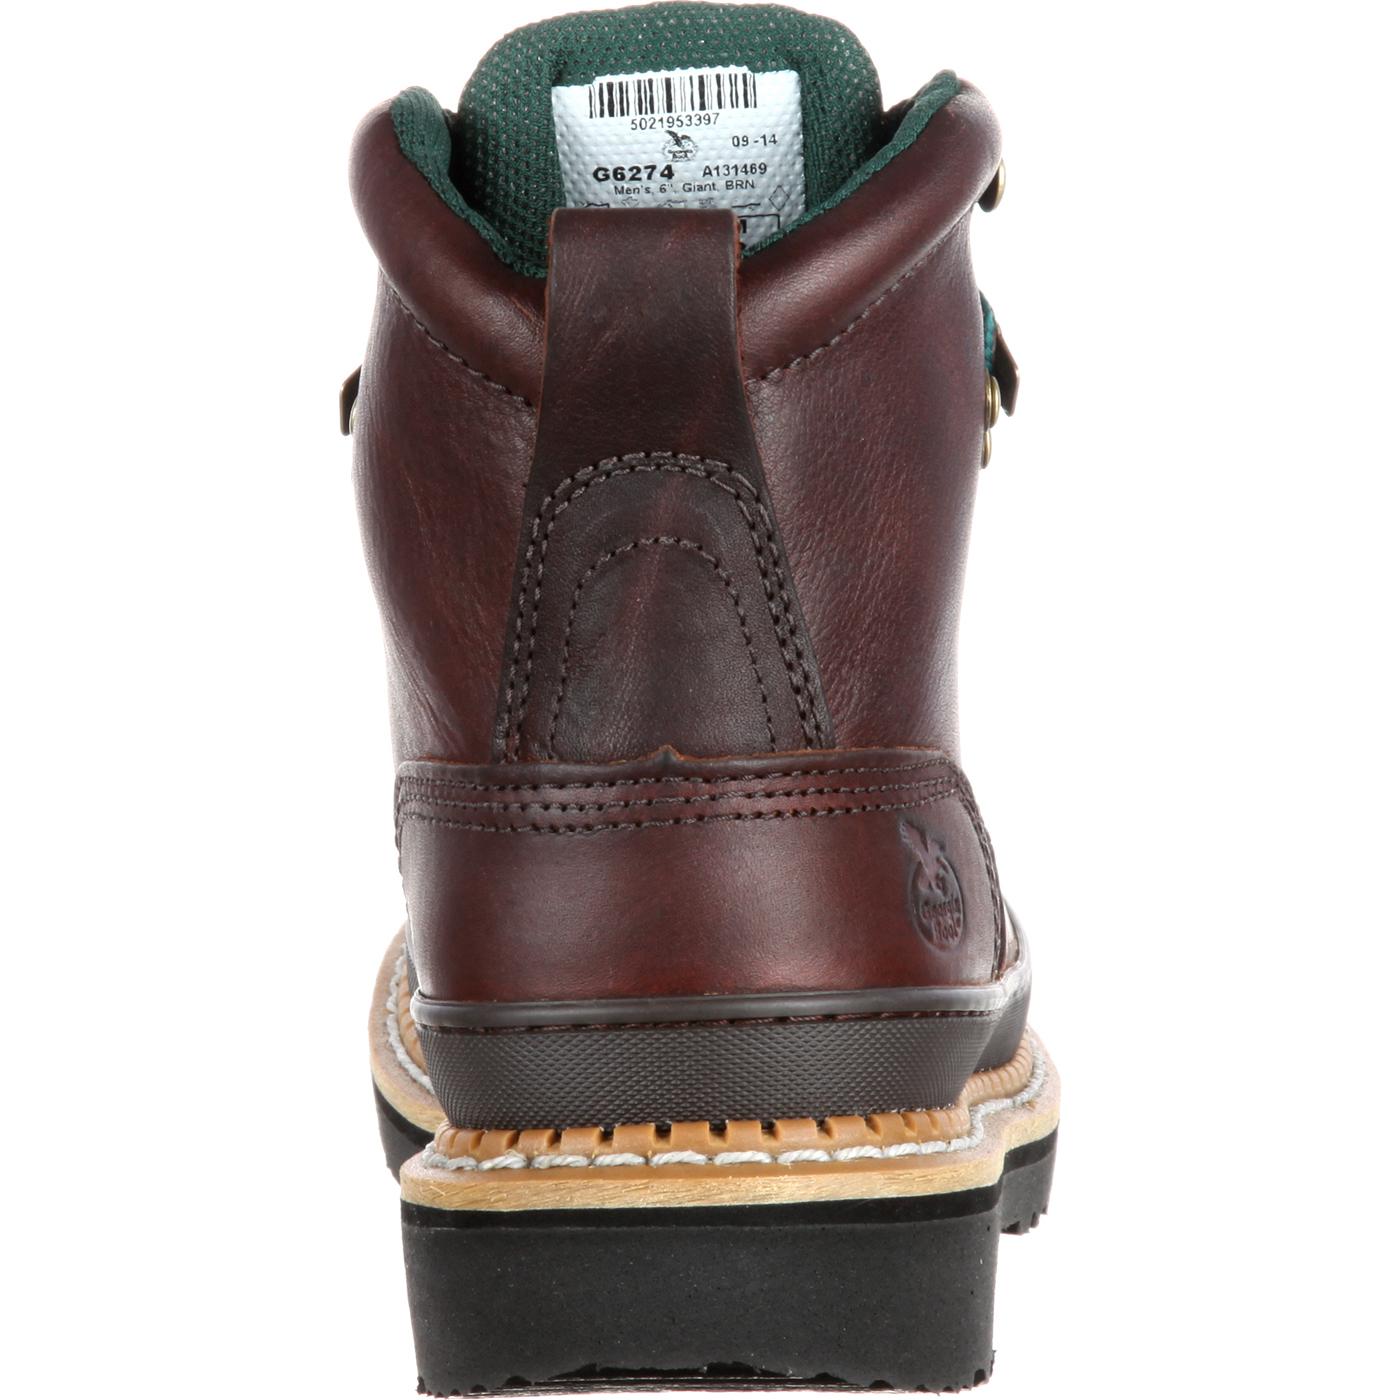 Georgia Boot - Men's 6" Brown Leather Work Boot, #G6274